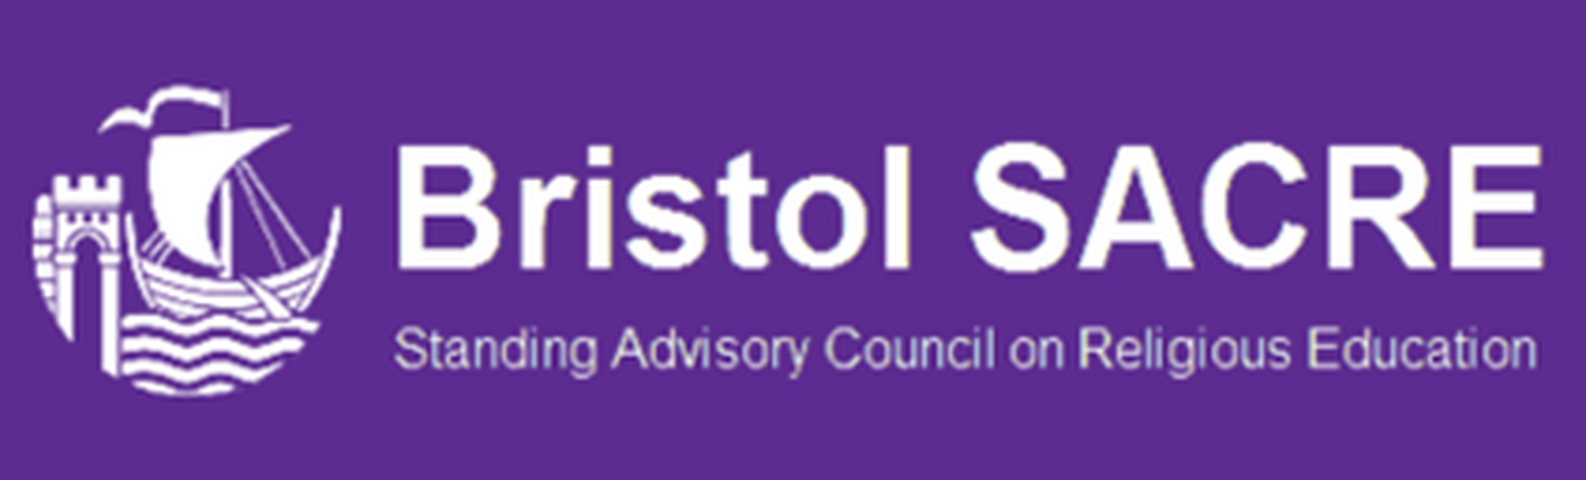 Bristol_Sacre_logo